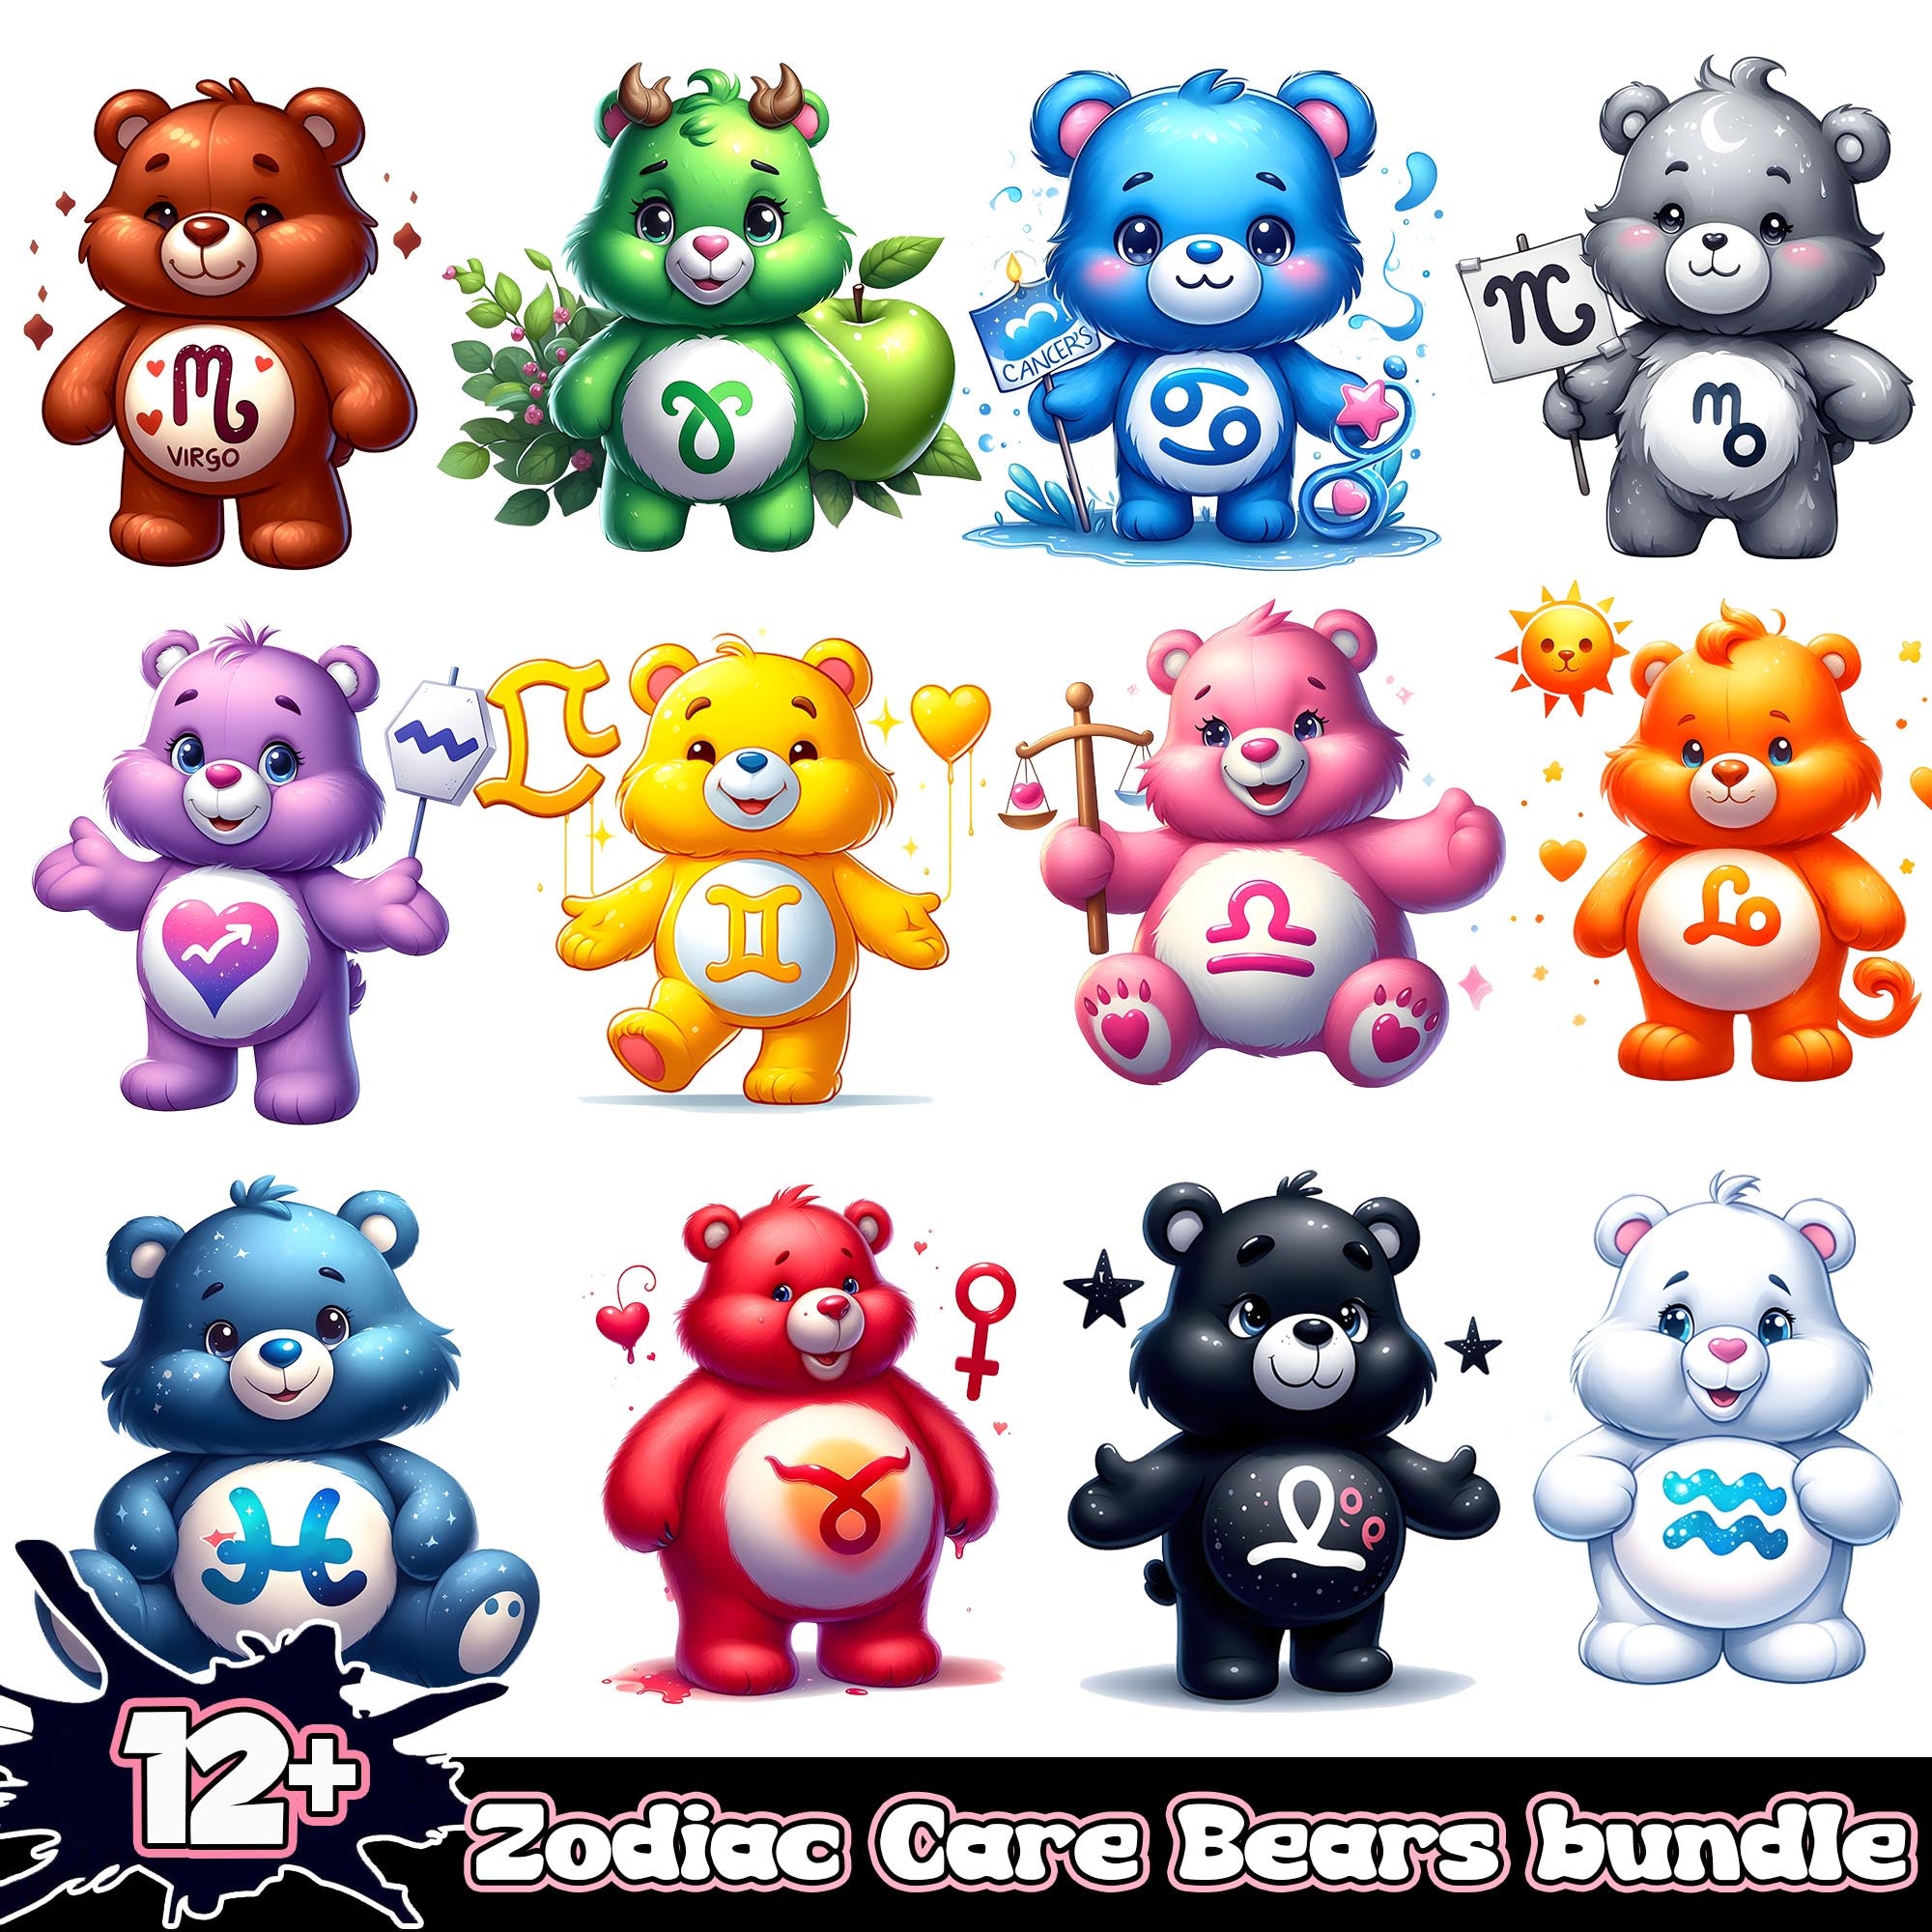 Zodiac Care Bears Bundle 12+ PNG 